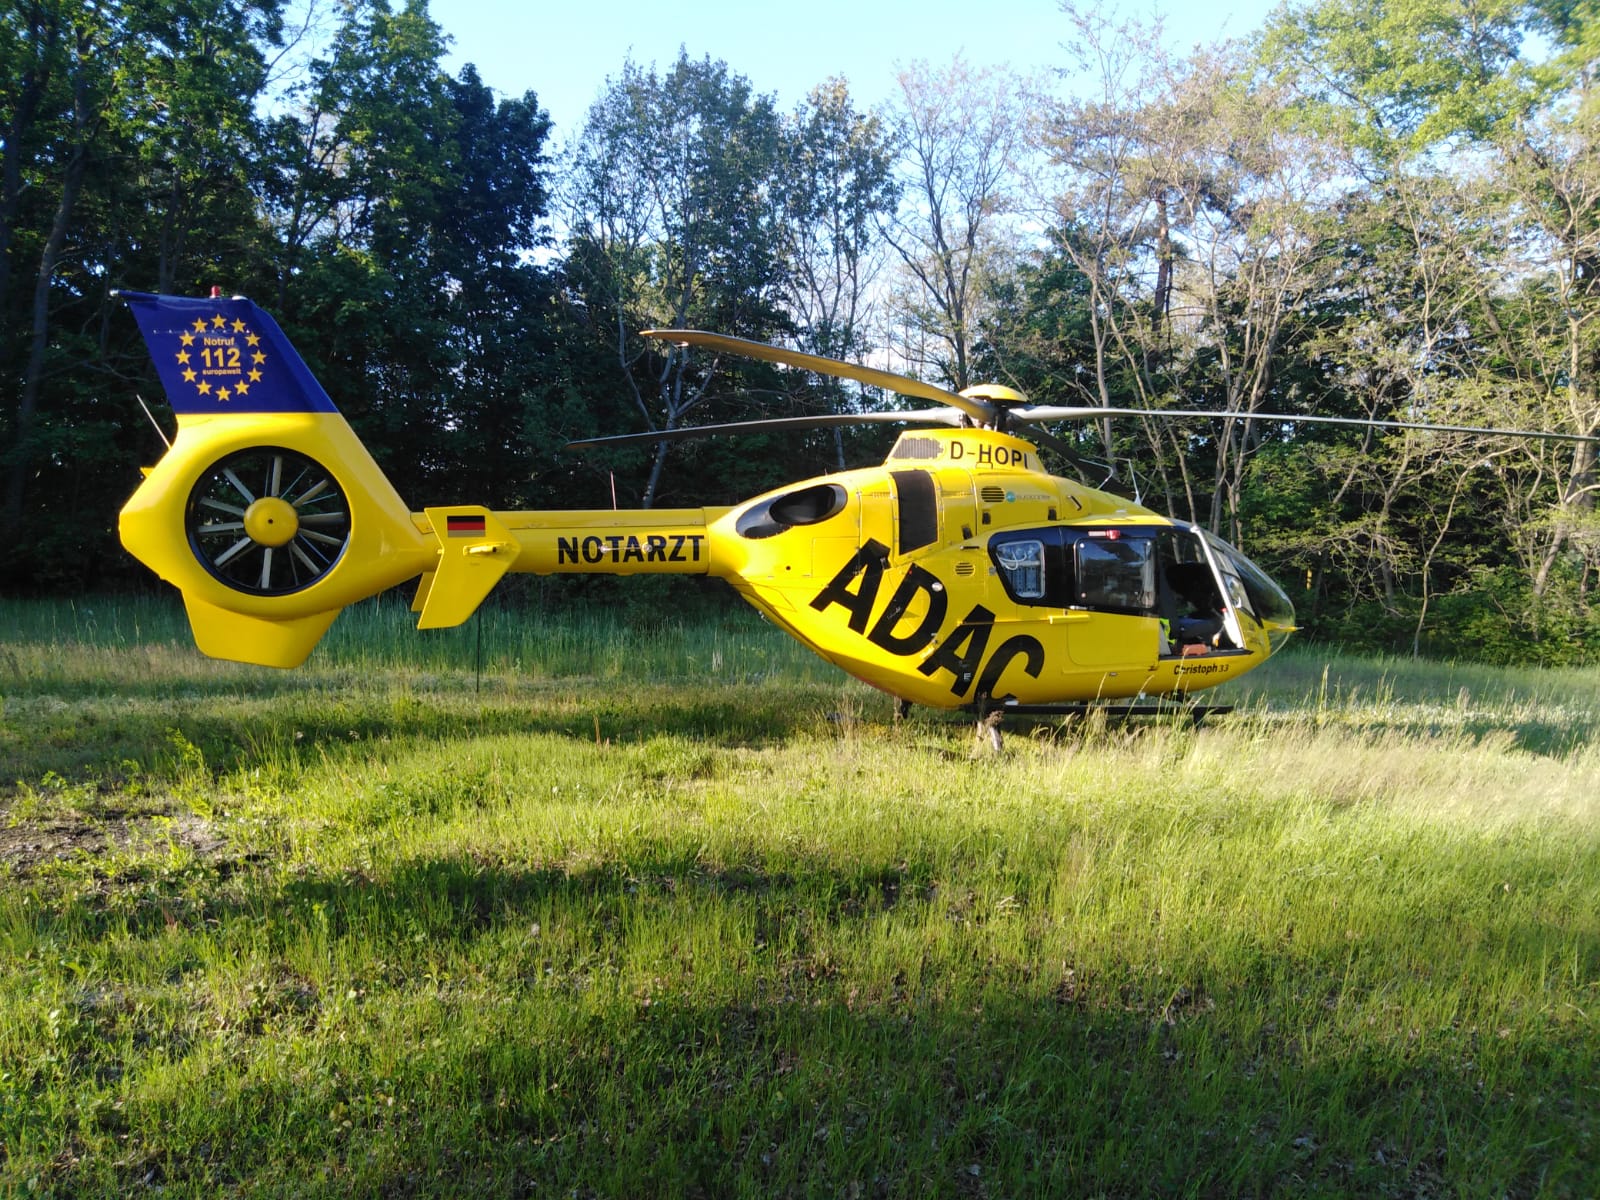 ADAC Rettungshelikopter der ADAC Luftrettung Senftenberg